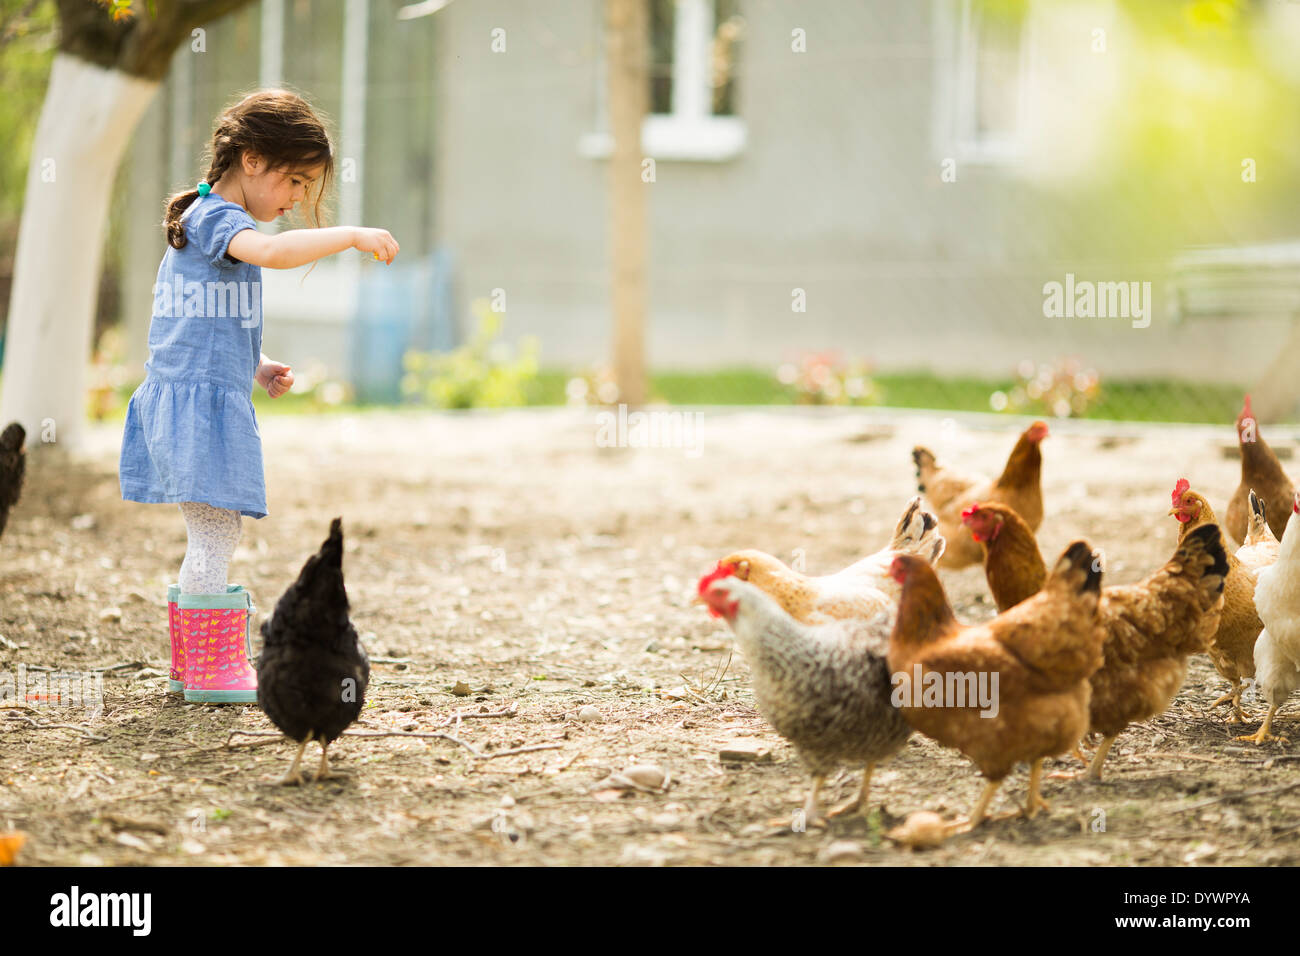 Little girl feeding chickens Stock Photo